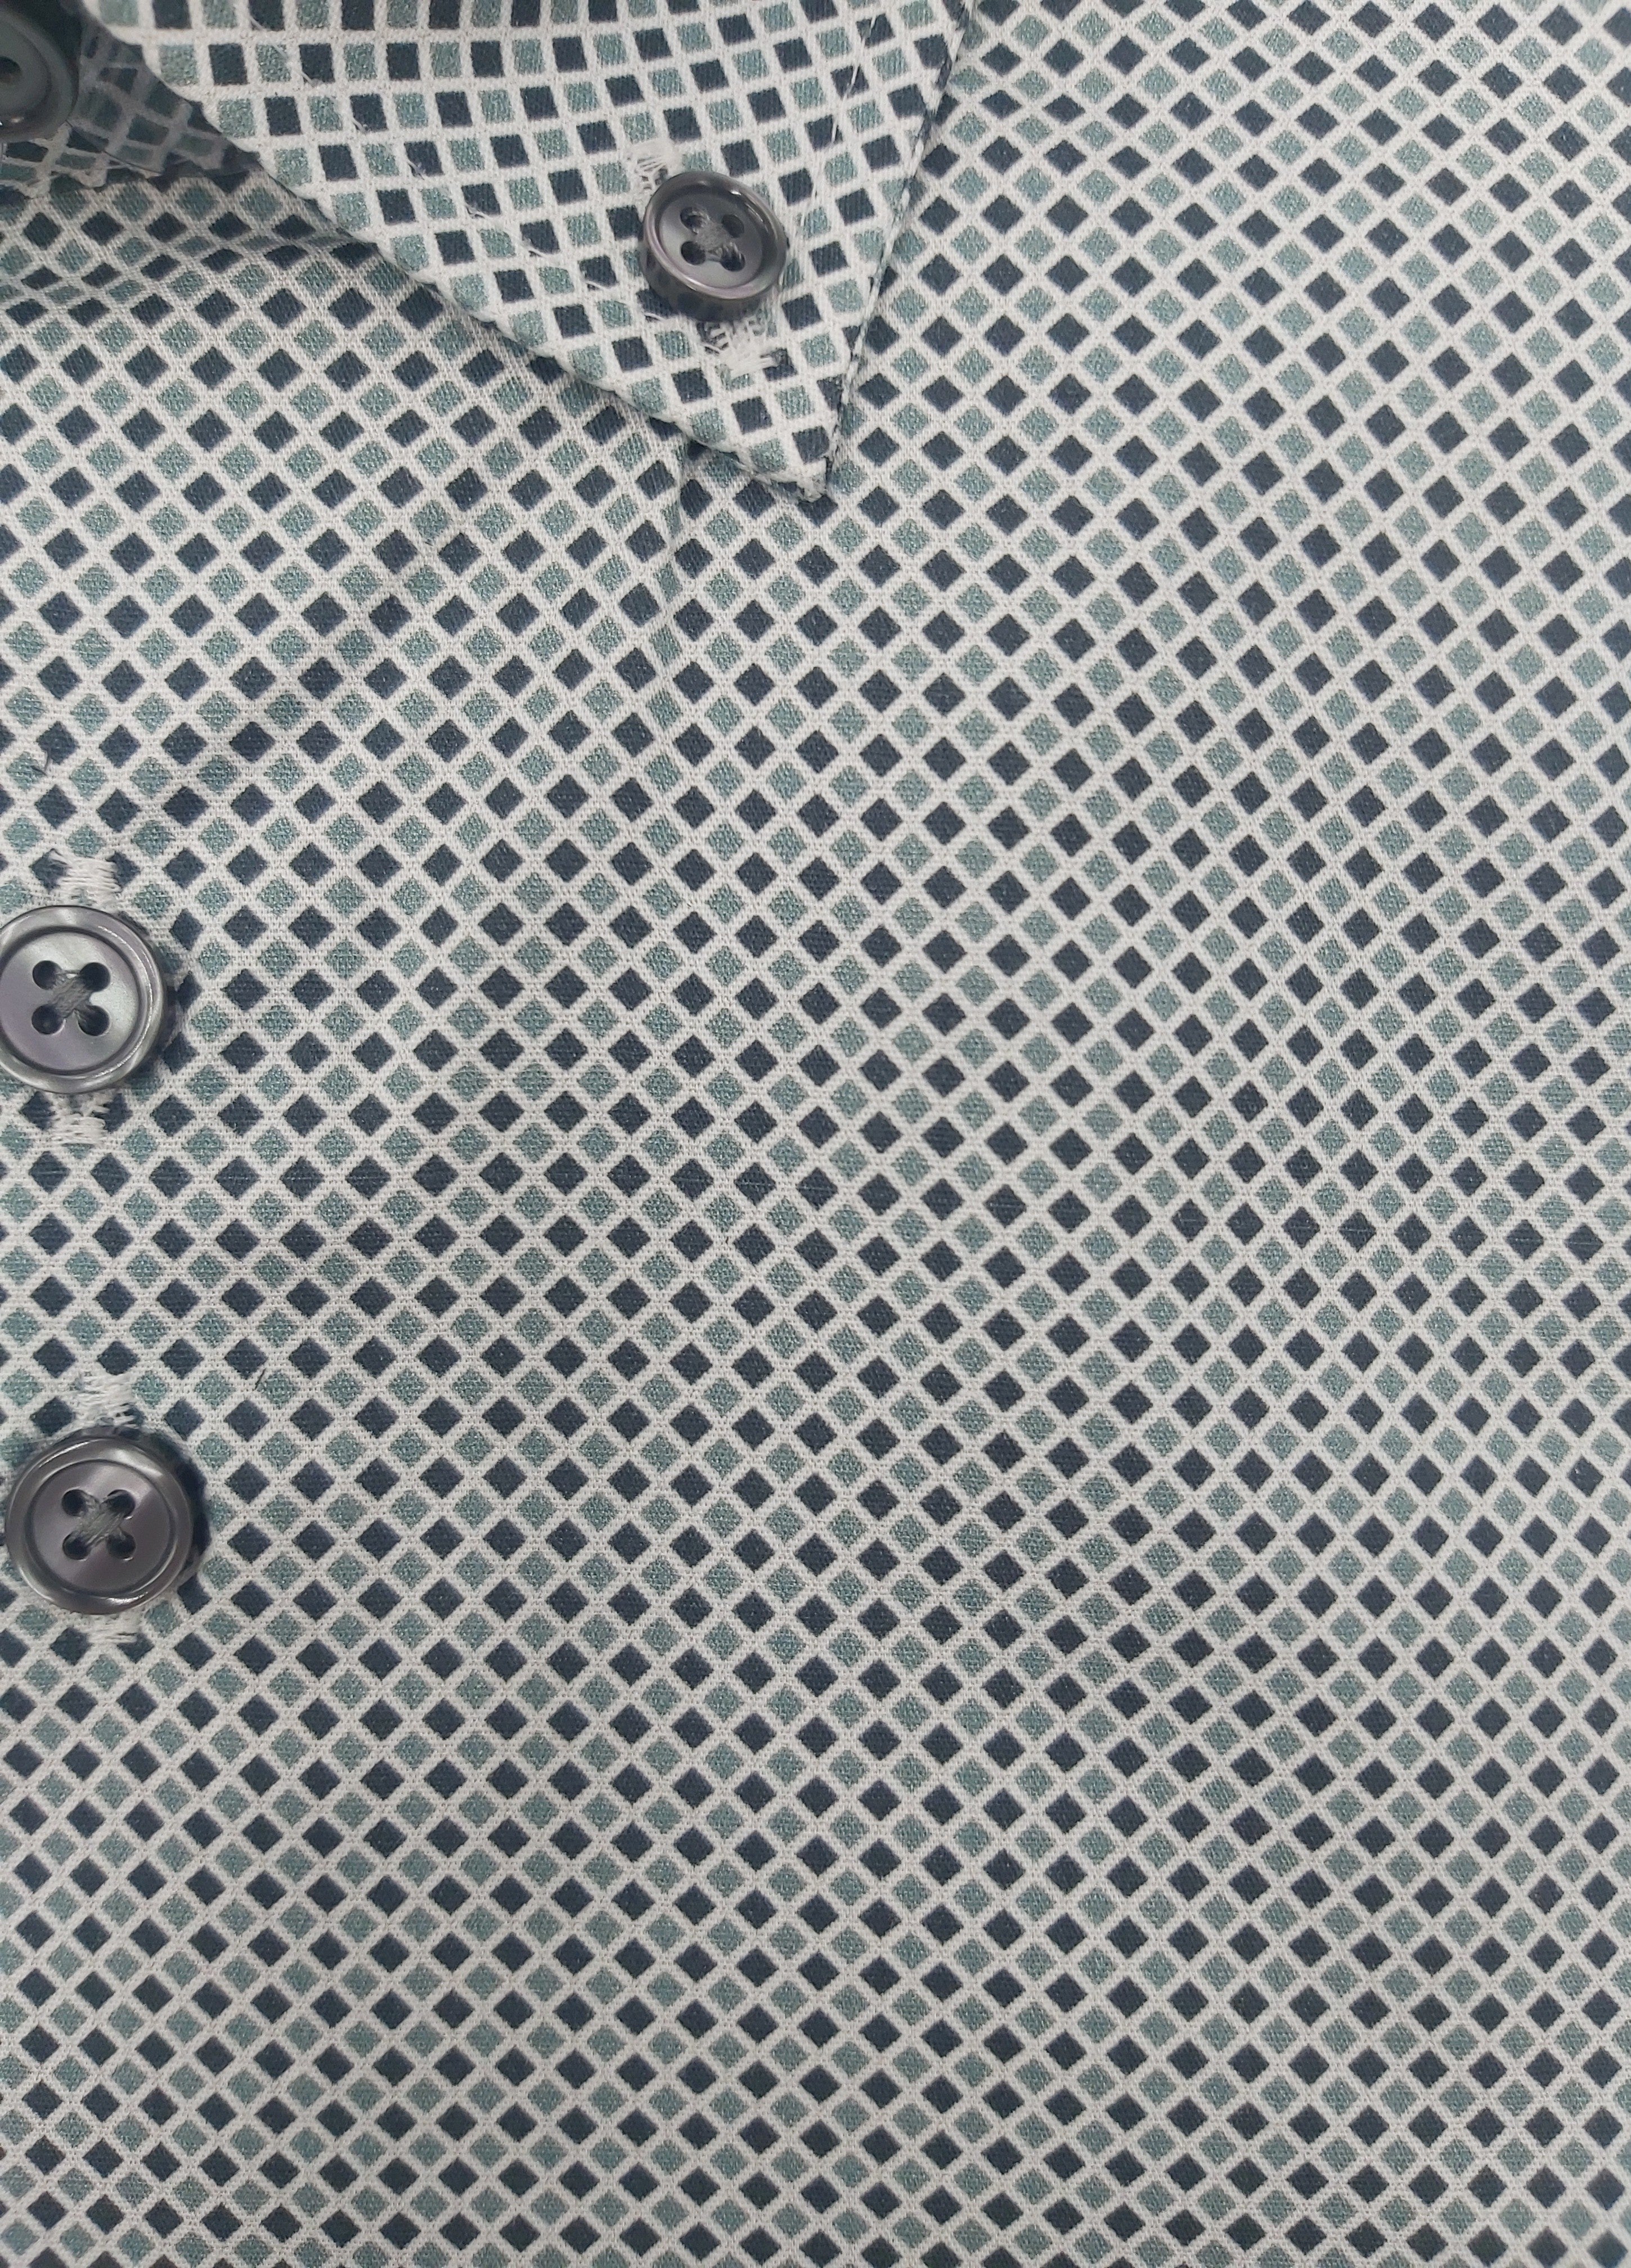 Men's Button Down Green/Black Diamond Print Shirt-Close Up View